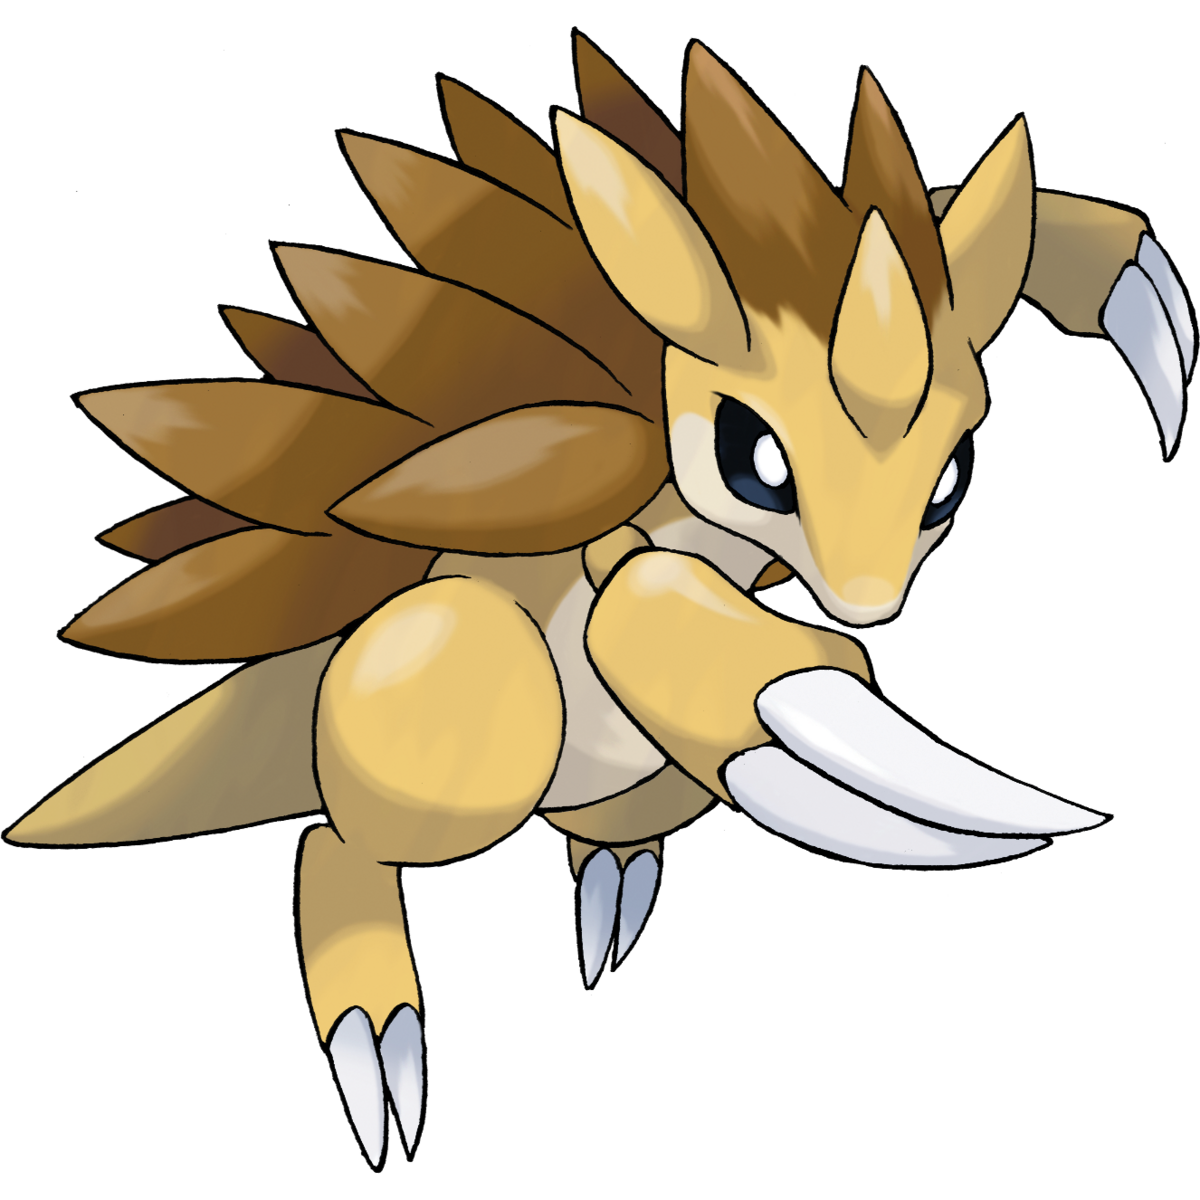 pokemon sandshrew evolution